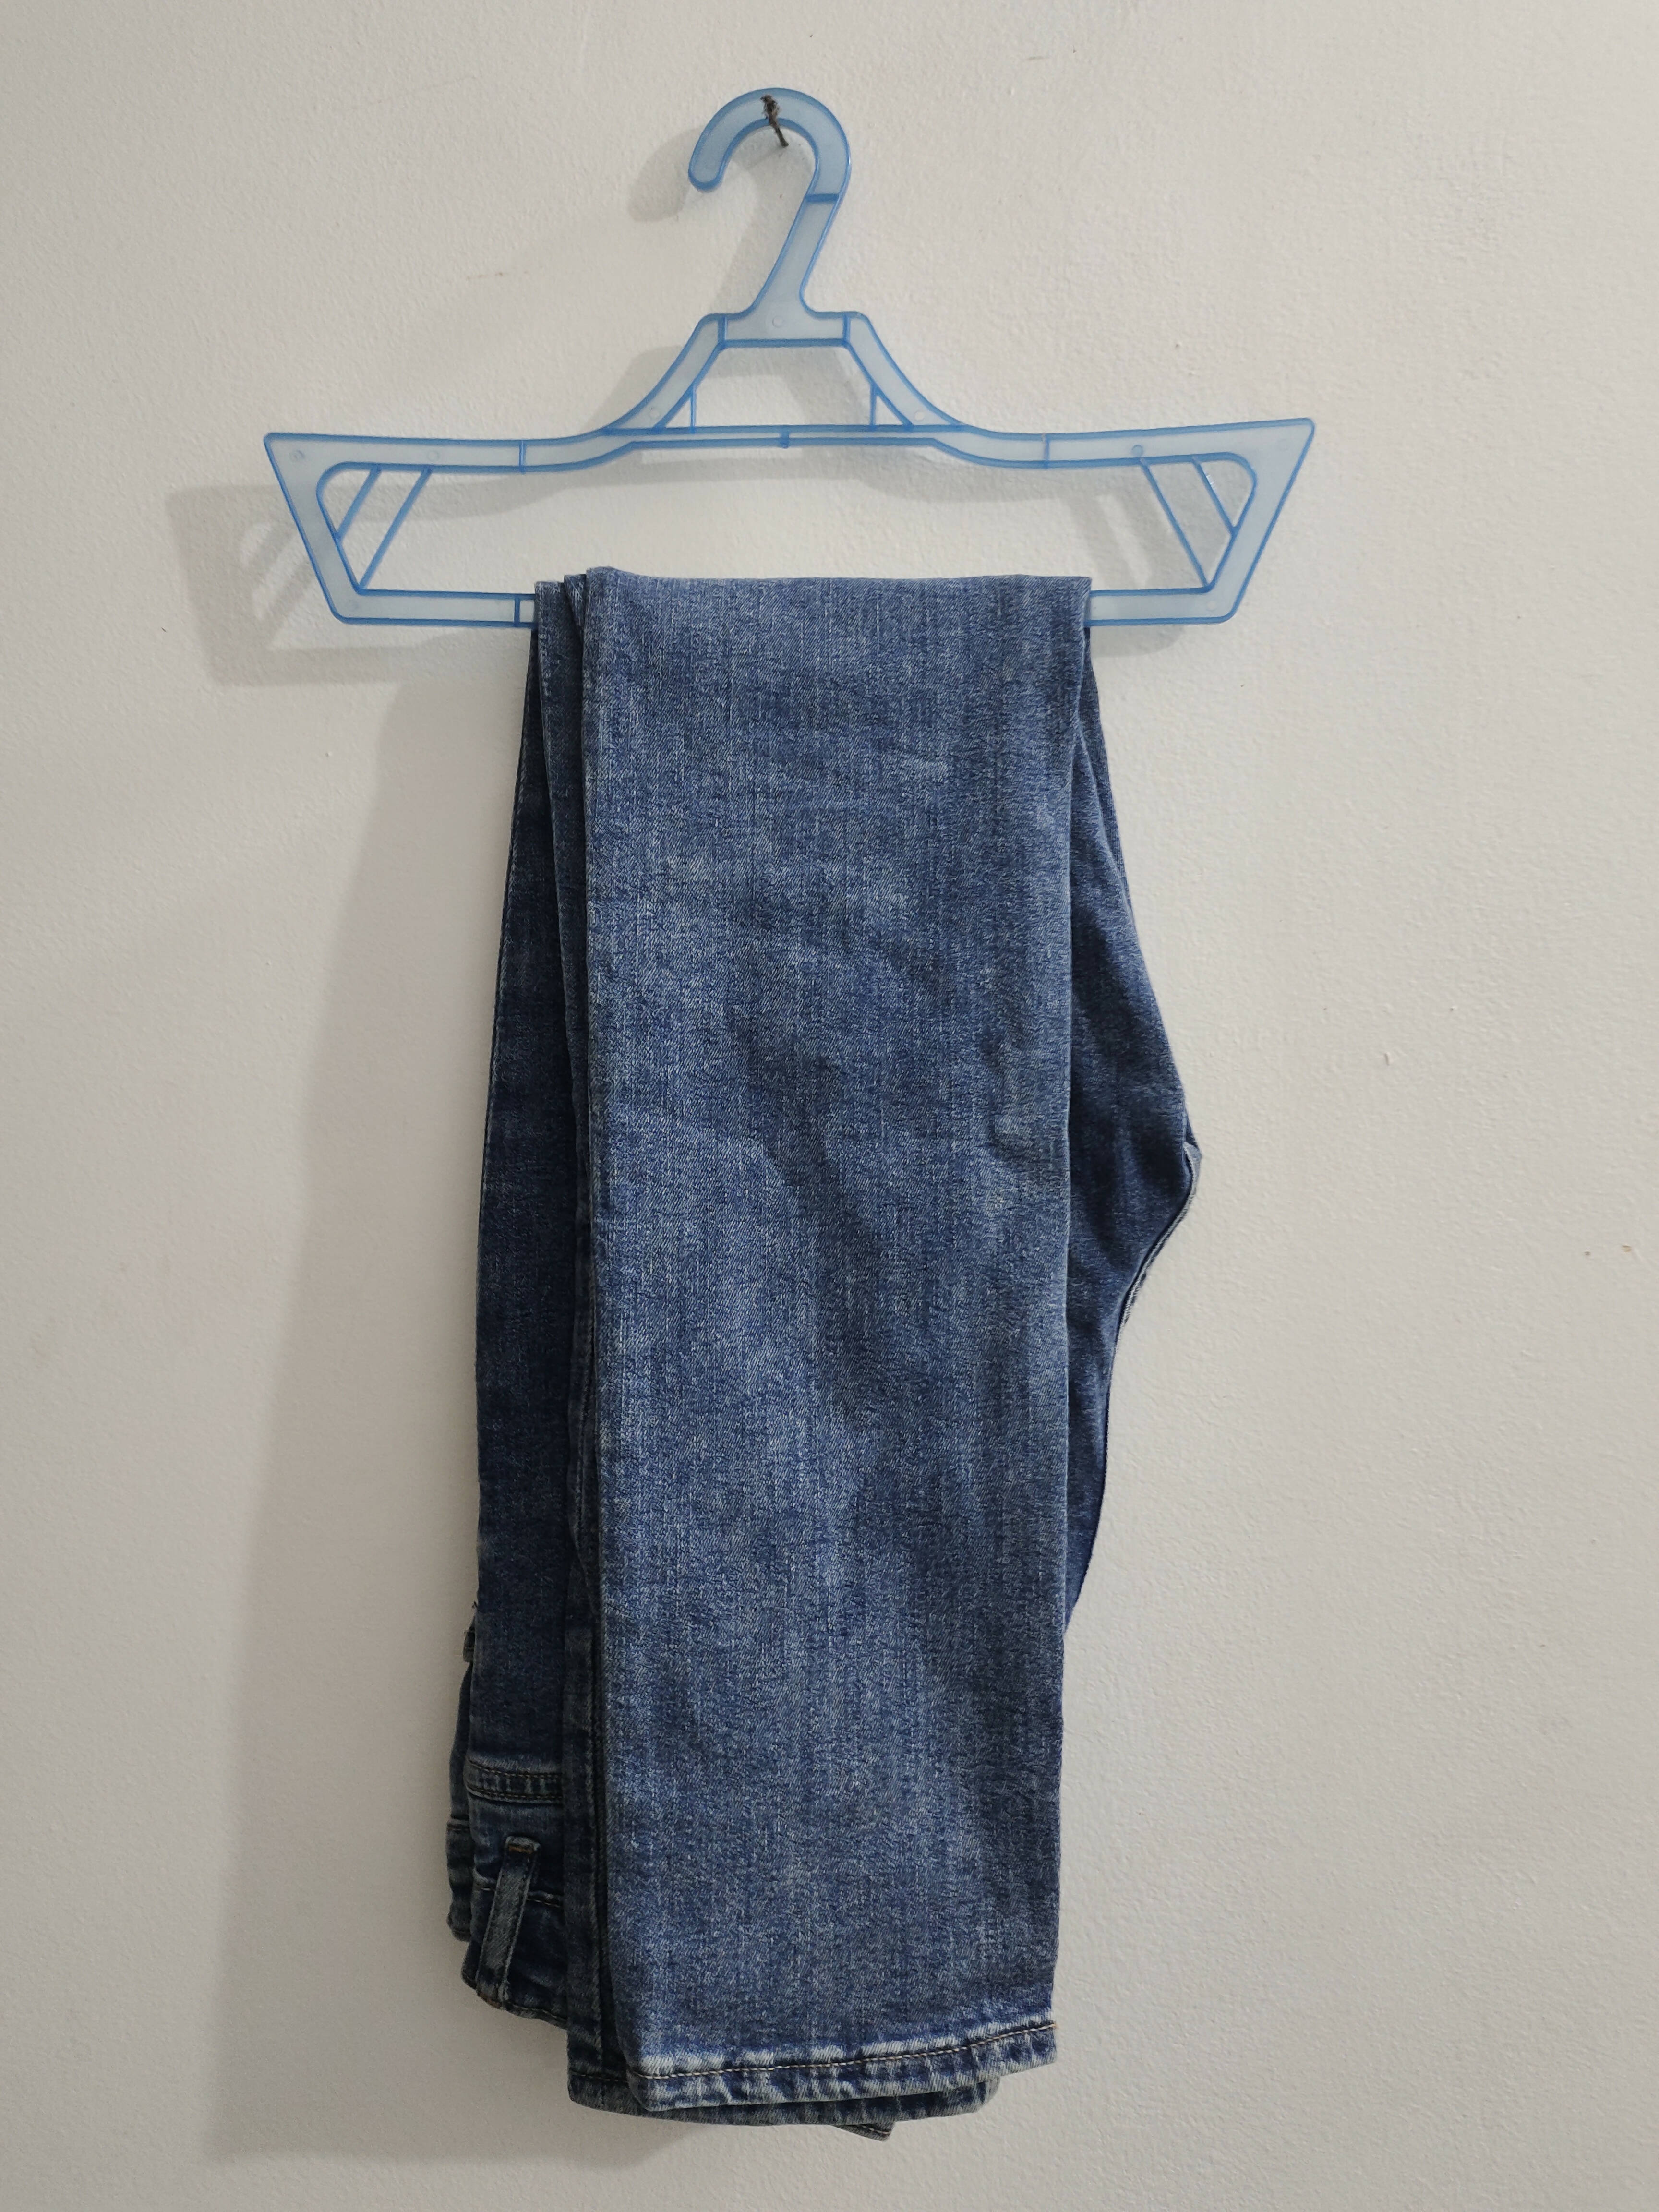 Demin | Blue jeans (Size: S ) | Women Bottoms & Pants | Worn Once